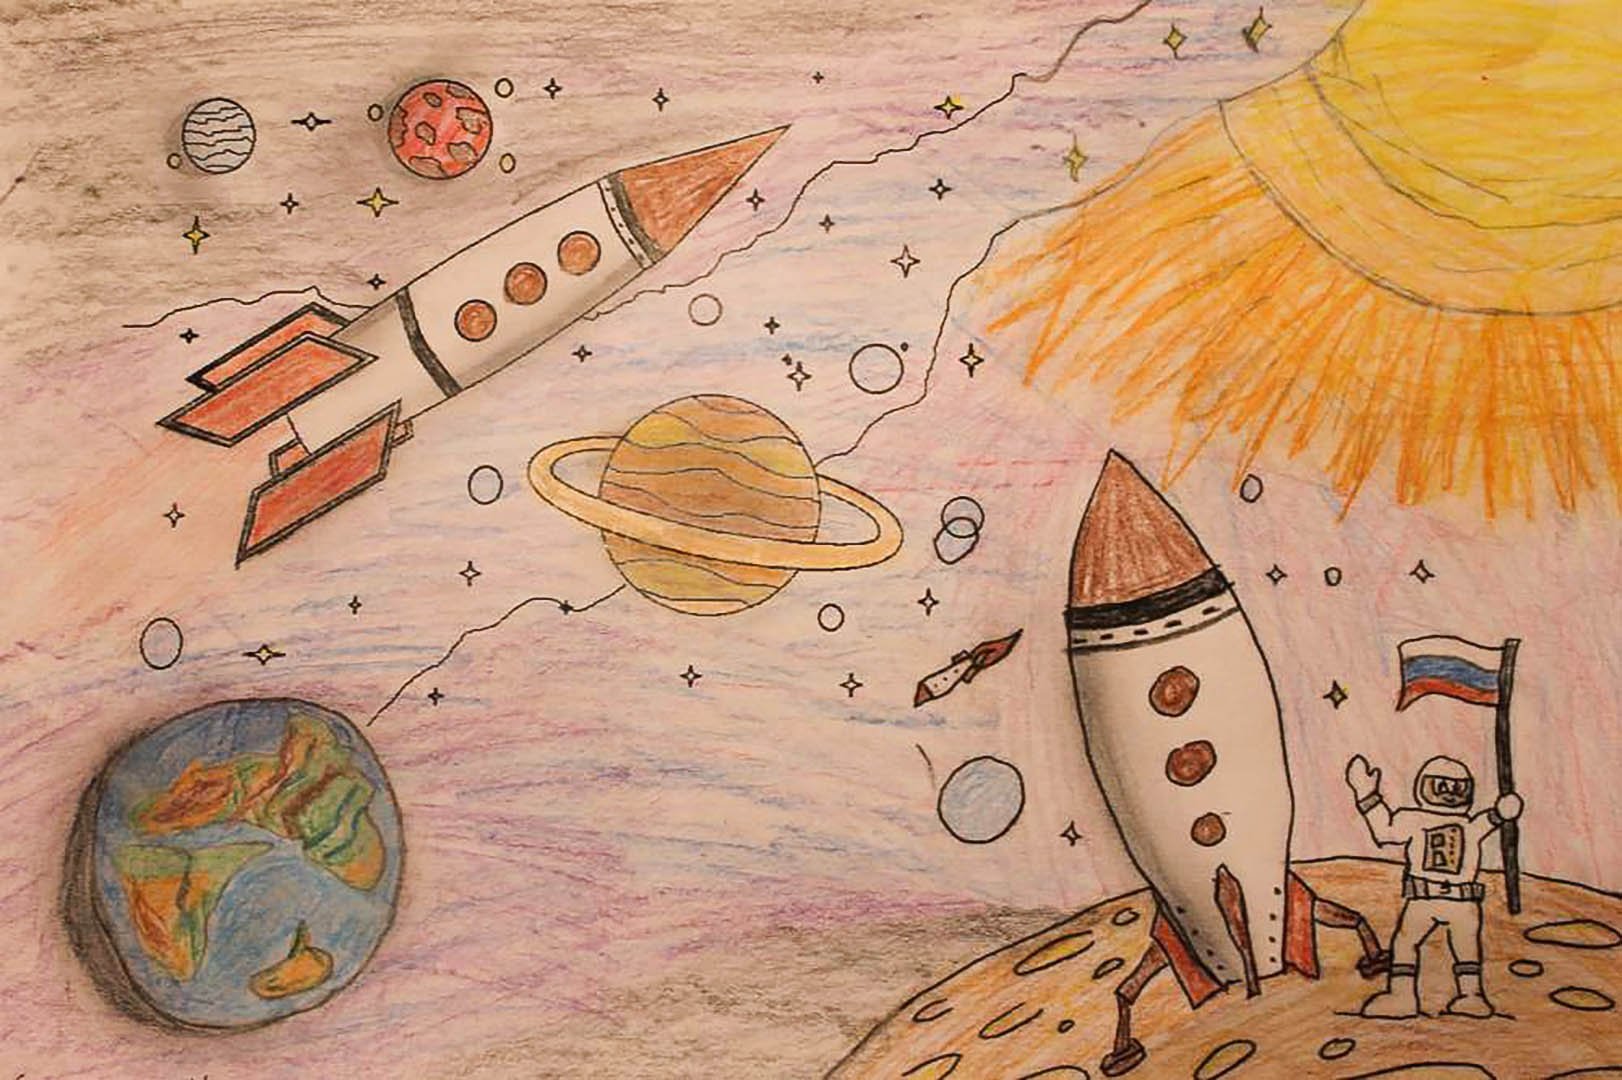 Рисунок на тему космонавтики 5 класс. Рисунок на тему космос. Рисунок на космическую тему. Рисование на тему космос. Рисунок на космическую тему карандашом.